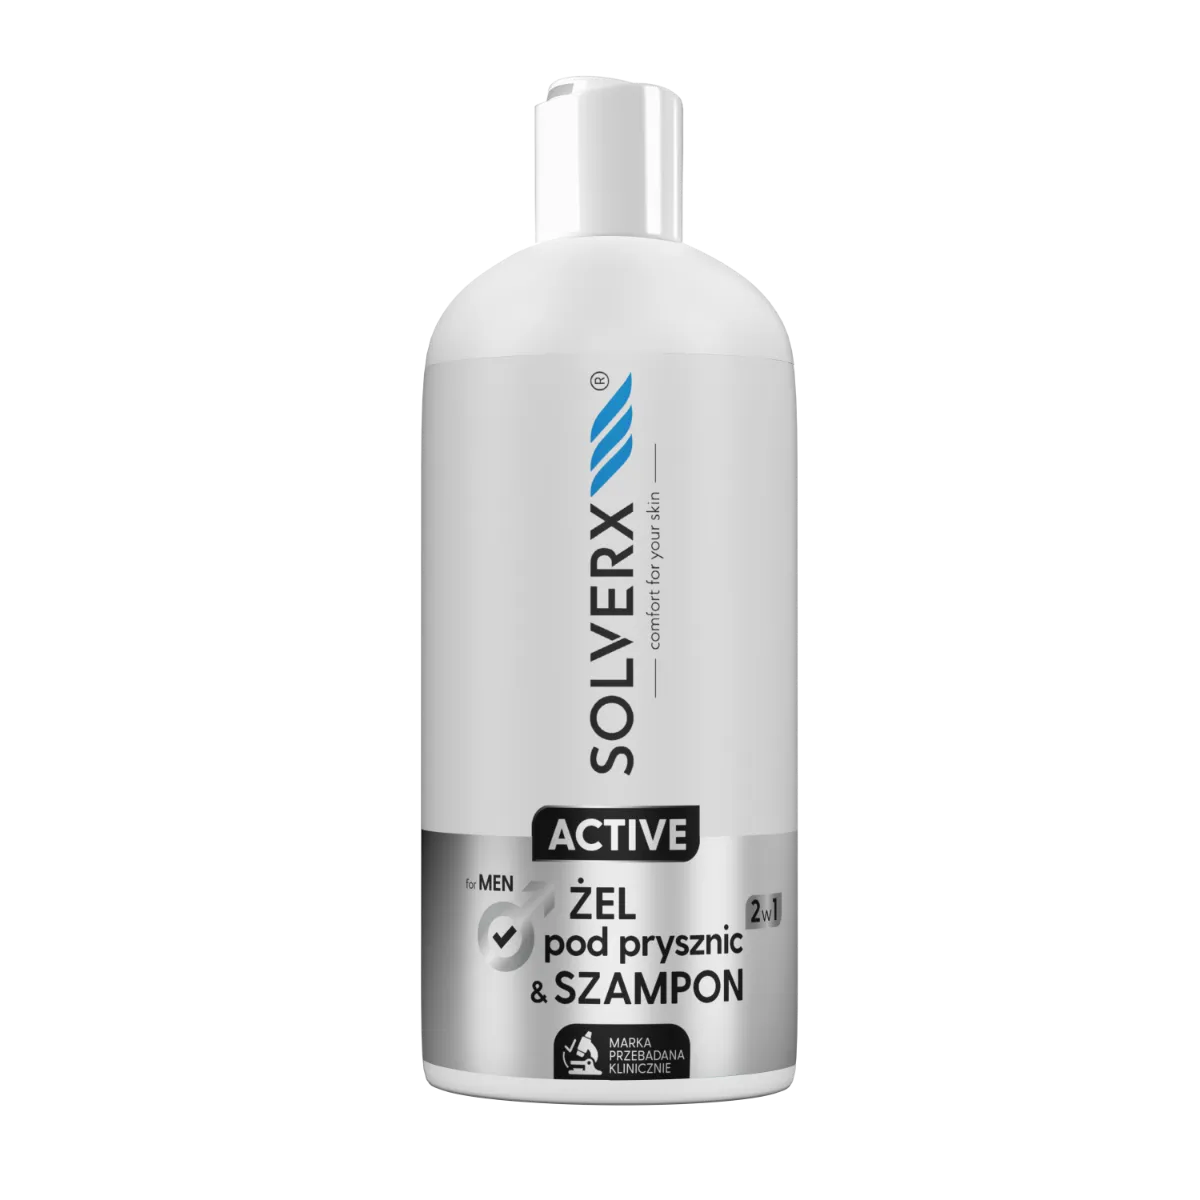 Solverx Active Men Żel & szampon 2w1, 400 ml